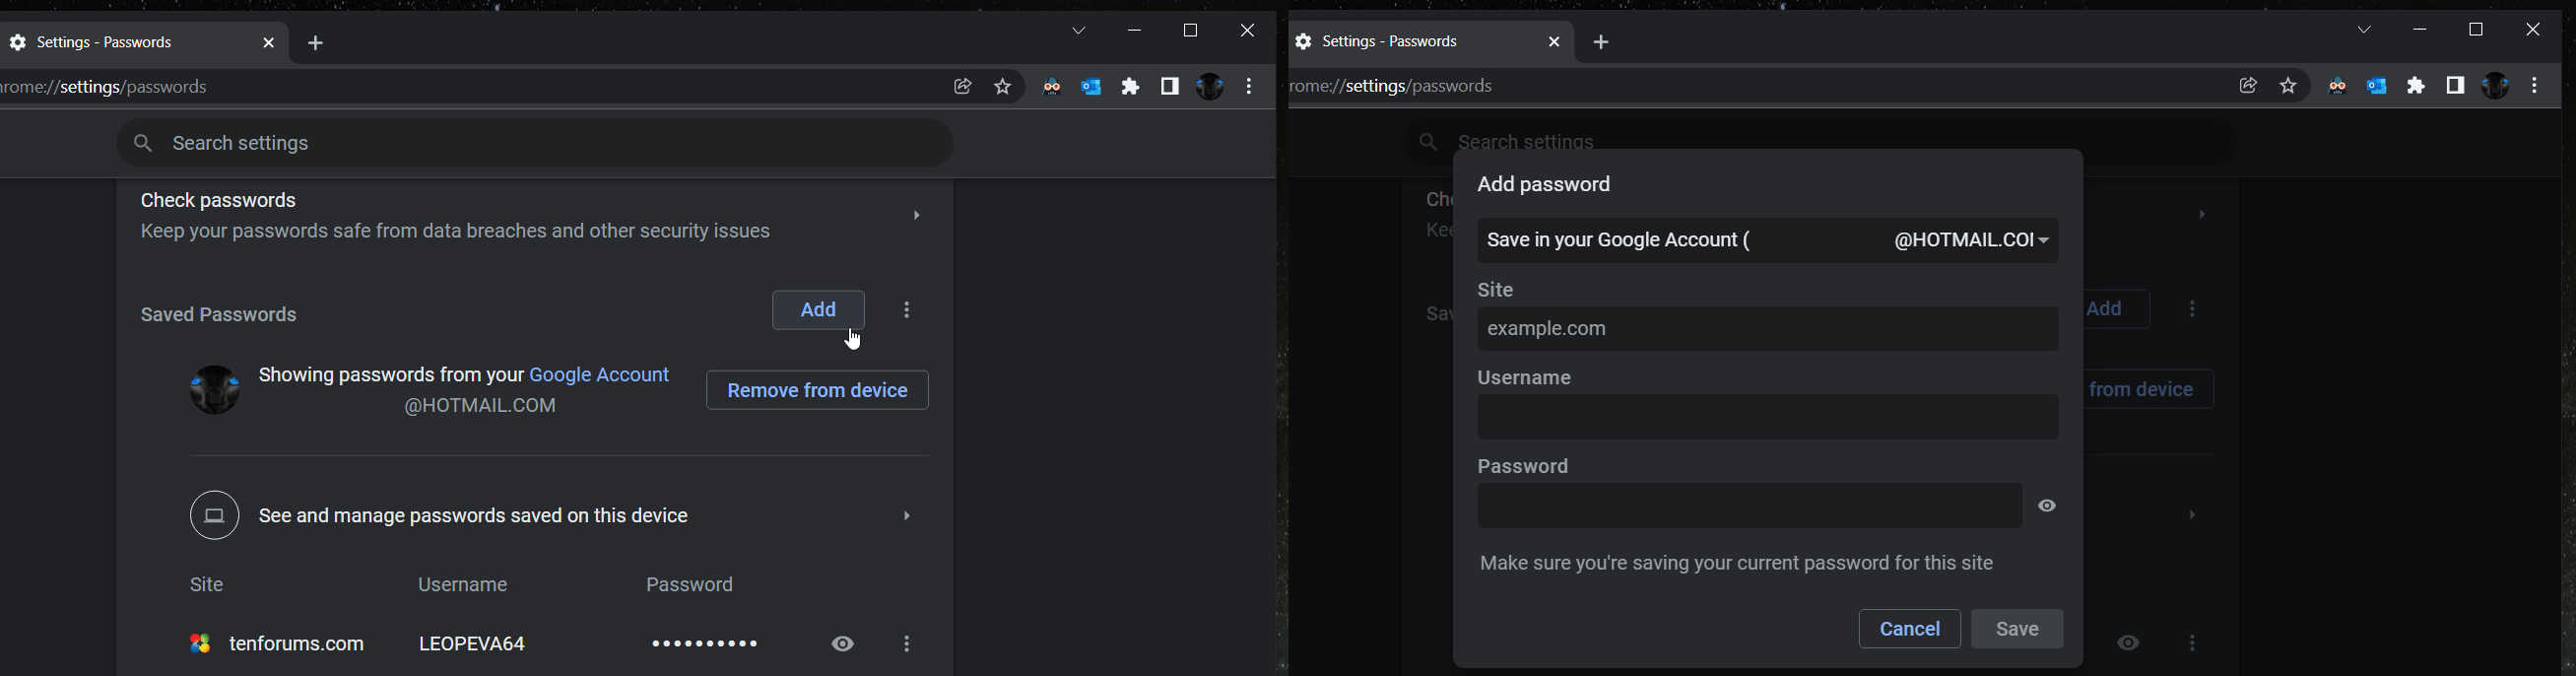 Chrome Add Password To Saved Passwords